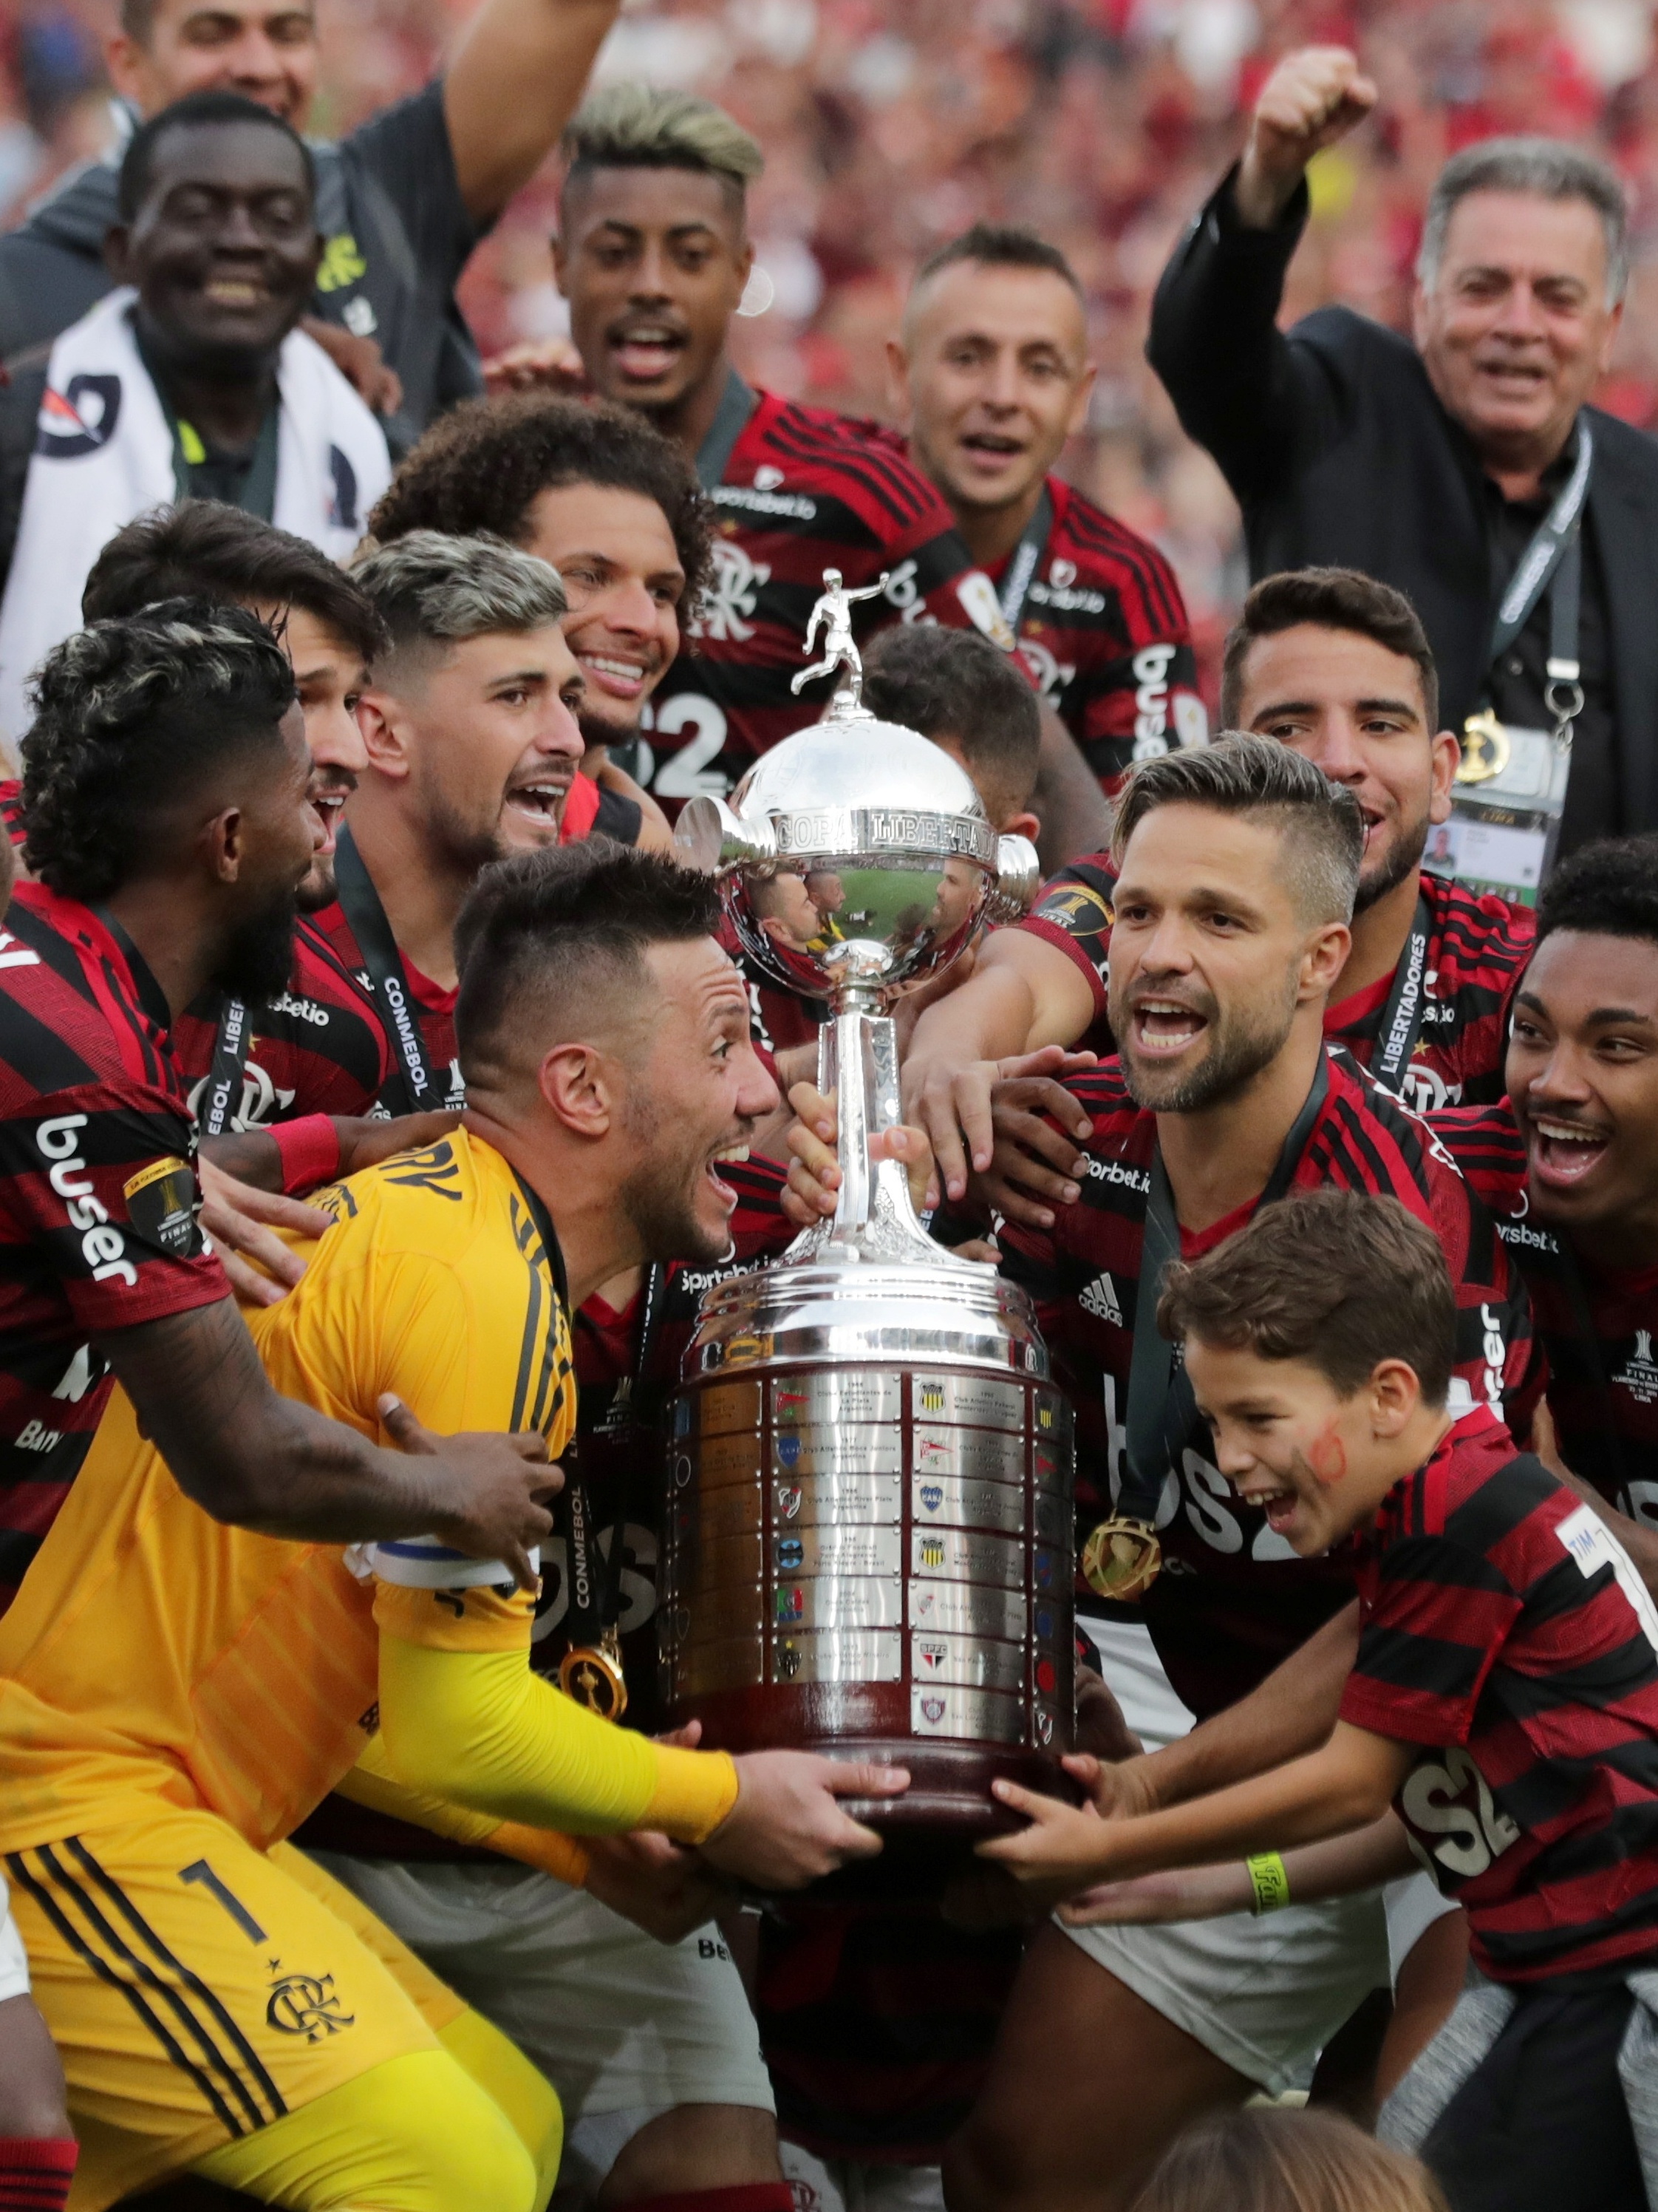 BUTECO DO FLAMENGO: Flamengo 5 x 1 Olímpia - Classificado para Semifinal da  Libertadores